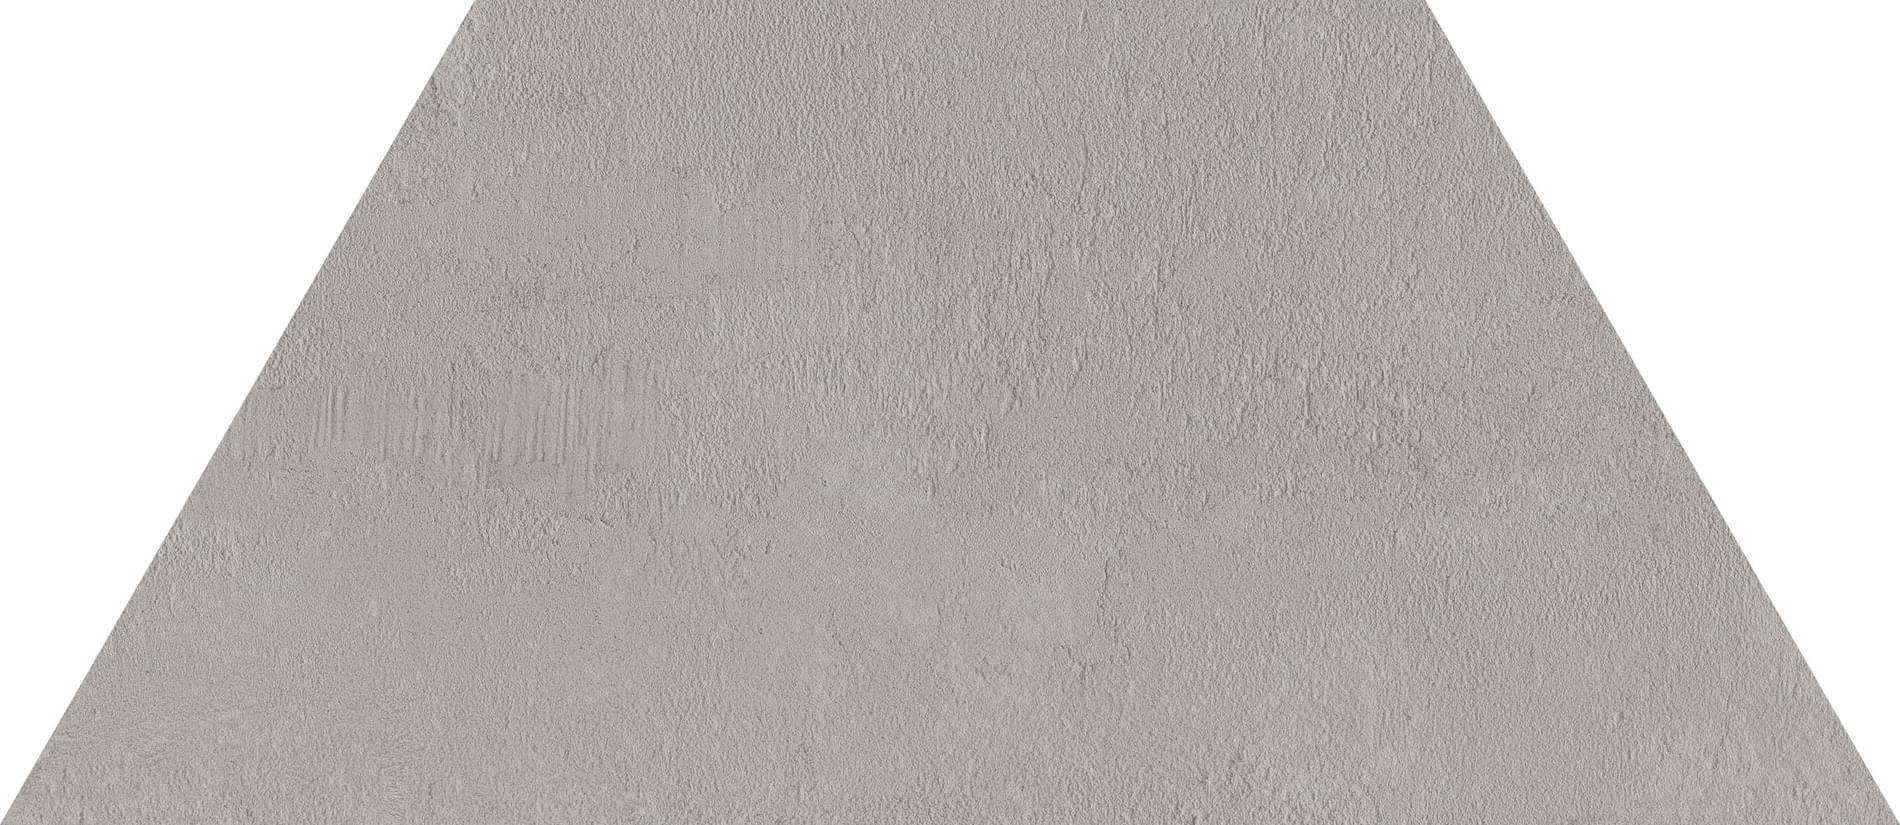 Керамогранит ABK Crossroad Chalk Grey Trapezio PF60000529, цвет серый, поверхность матовая, , 300x600